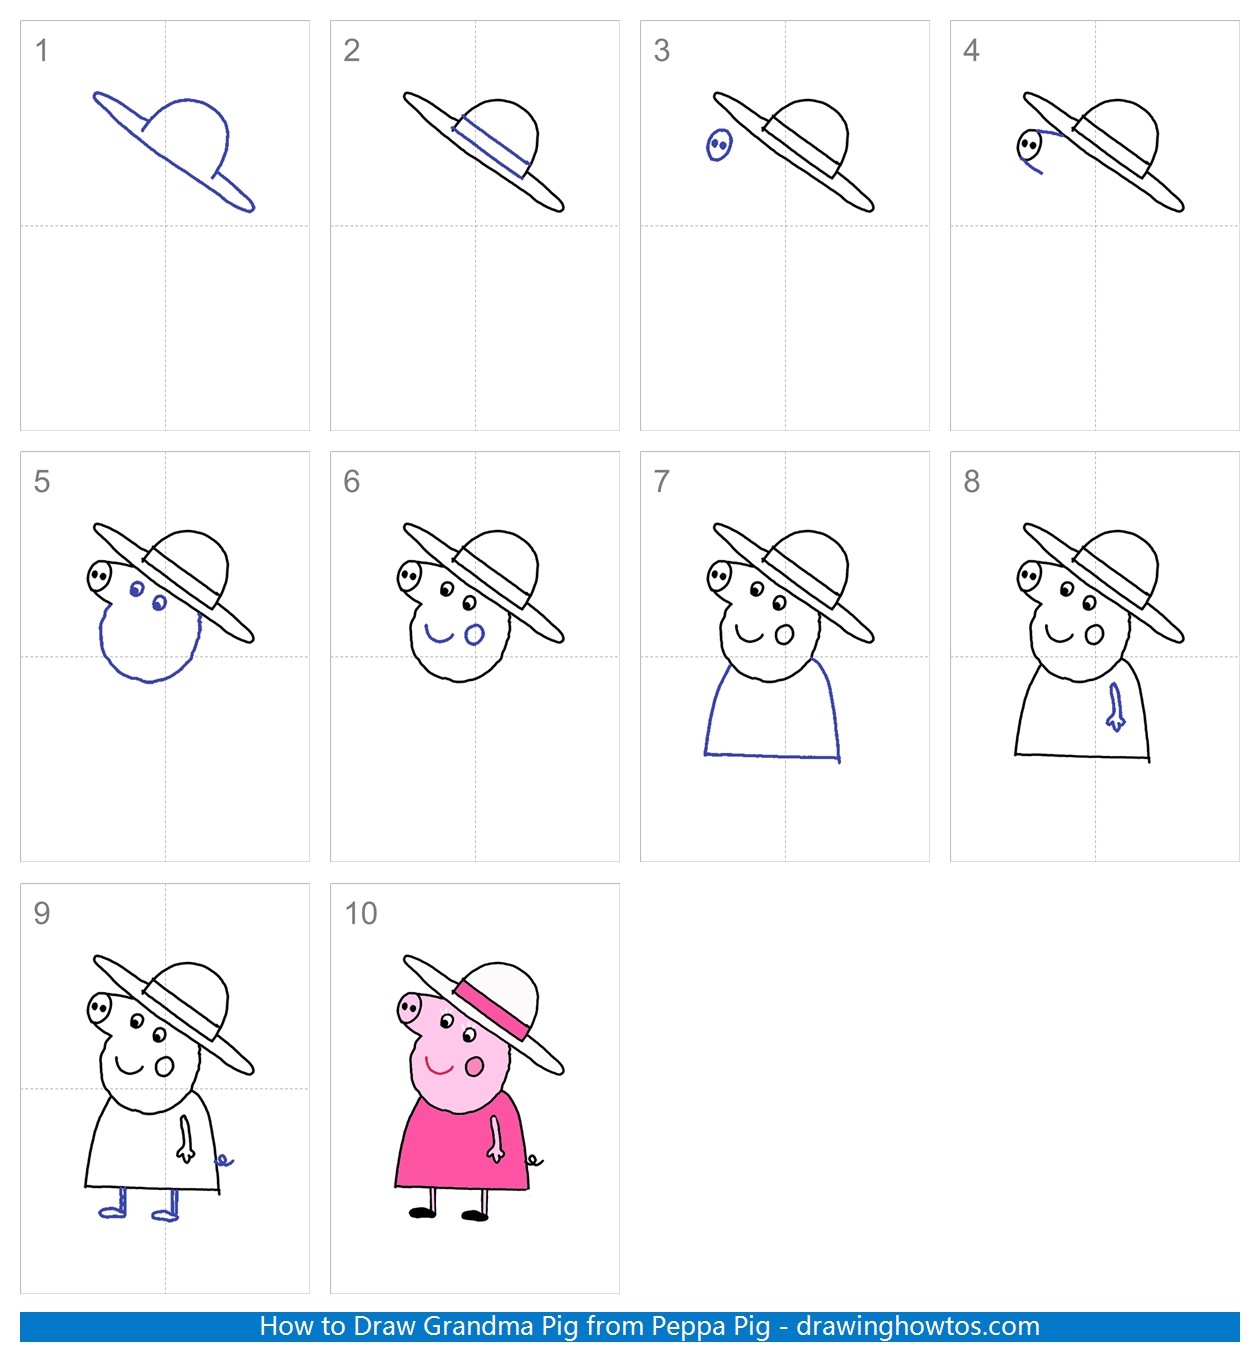 How to Draw Grandma Pig Step by Step